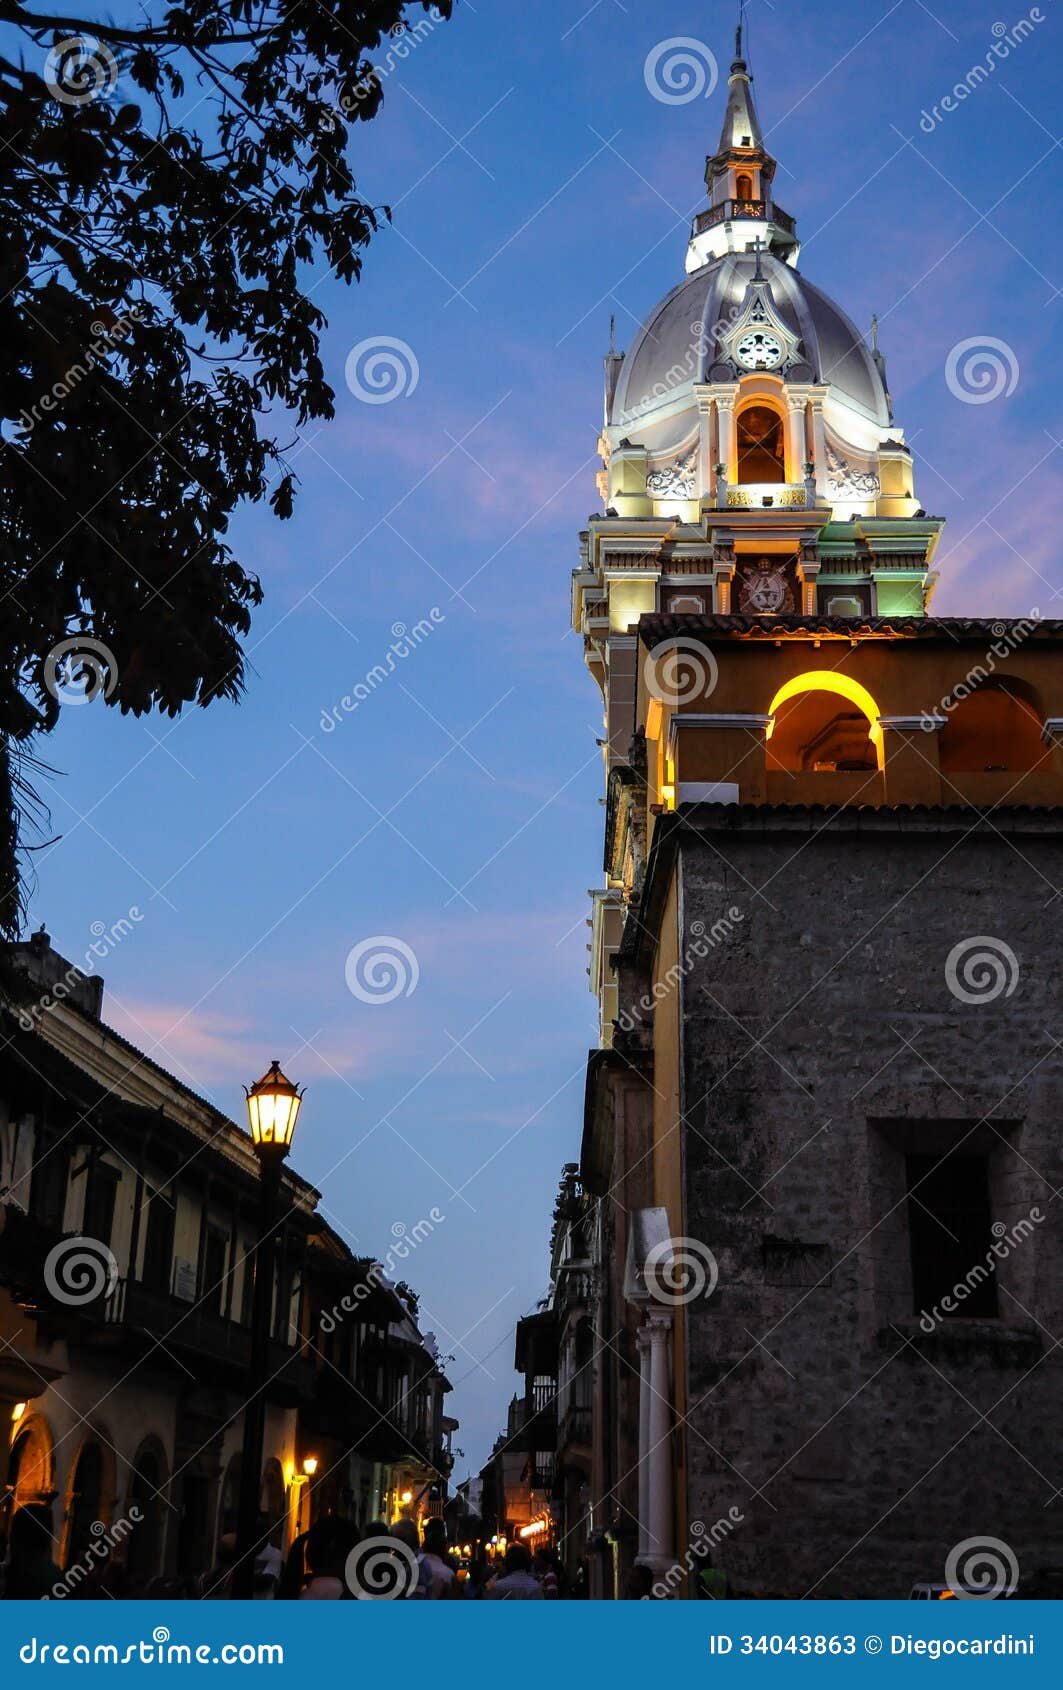 classical church pagoda, cartagena de indias cultural city, colombia.